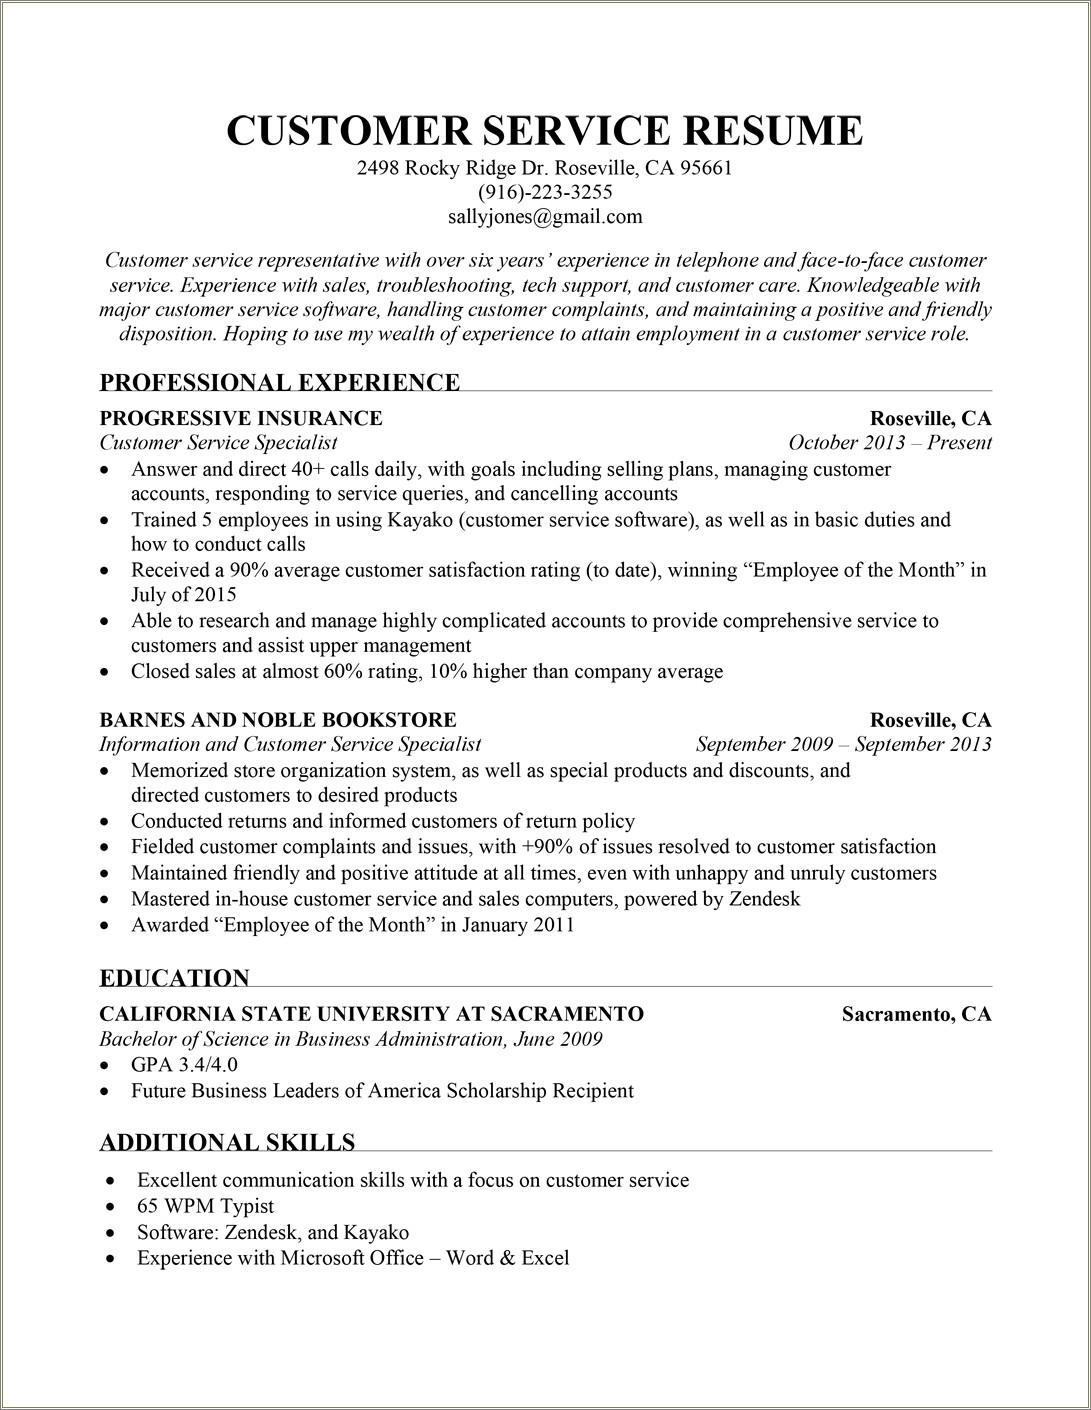 America's Job Center Resume Example